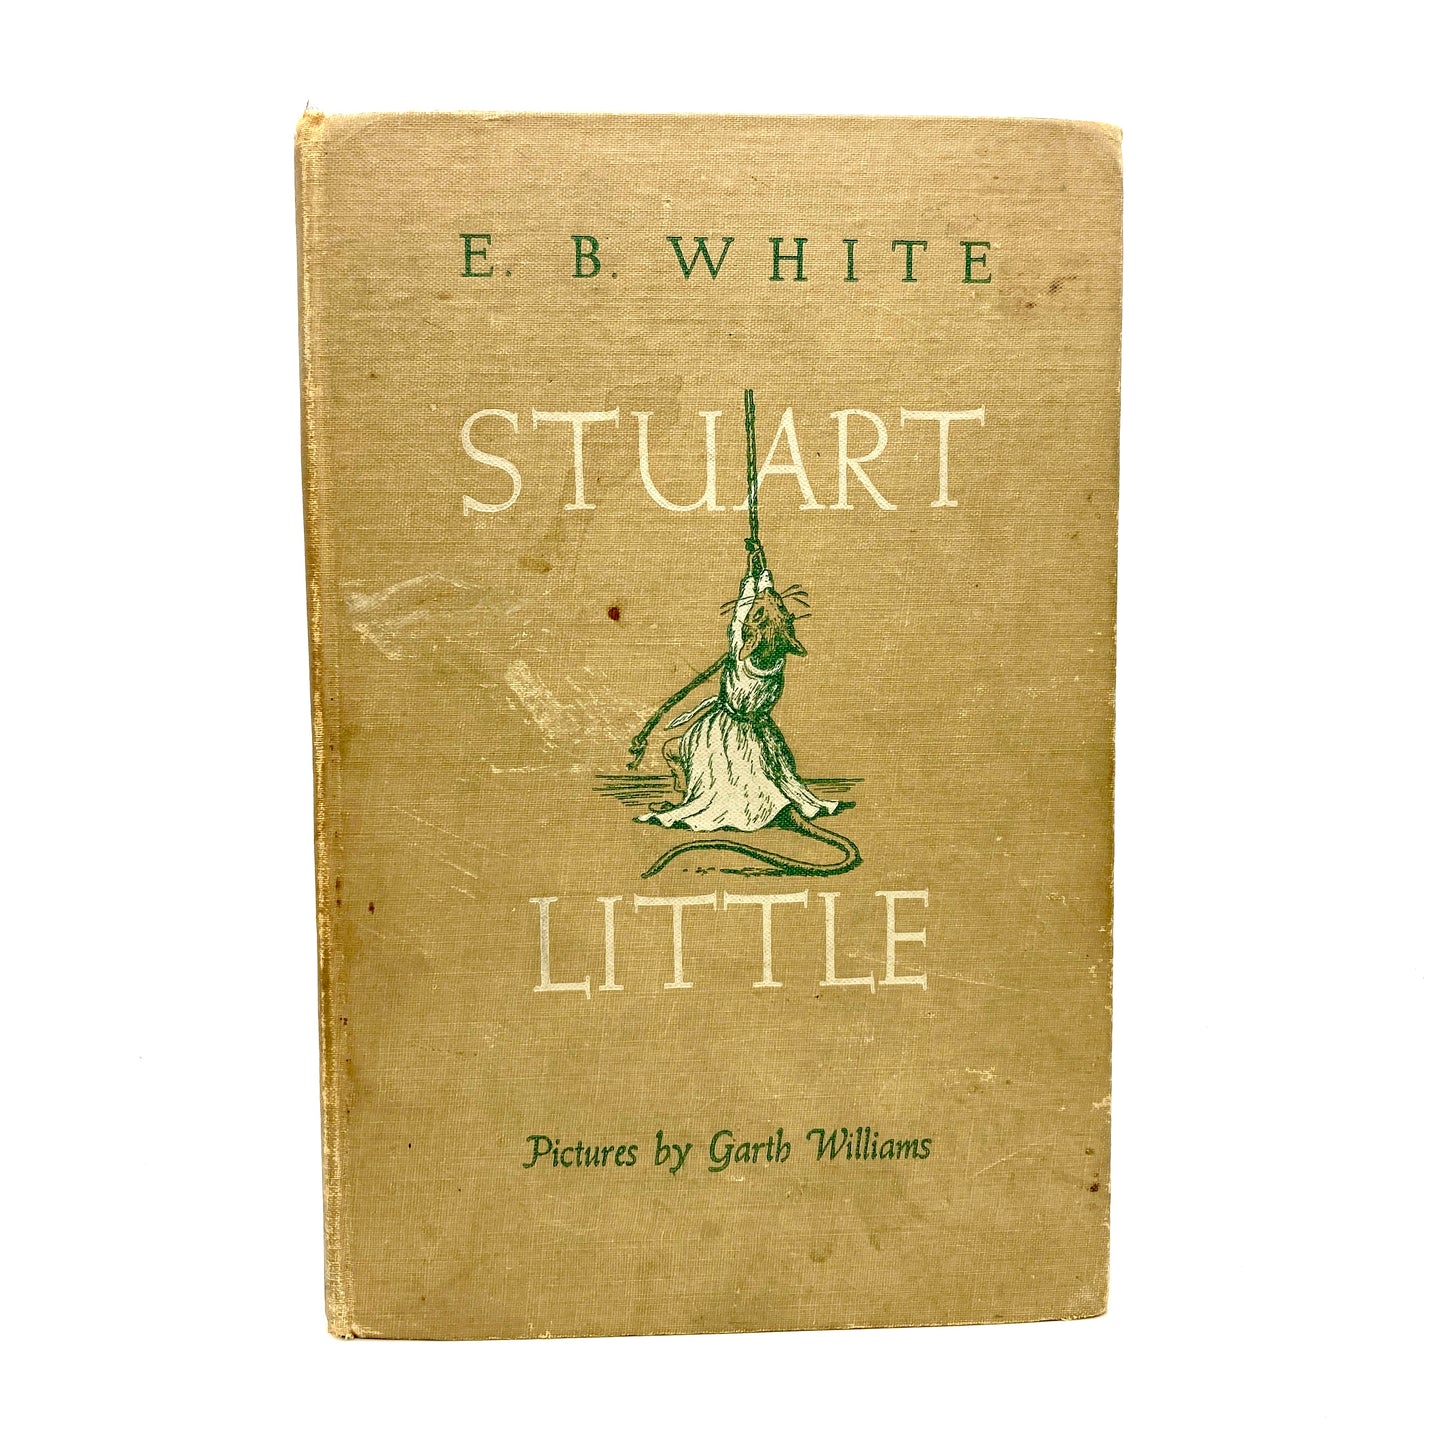 WHITE, E.B. "Stuart Little" [Harper & Brothers, 1945] 1st Edition